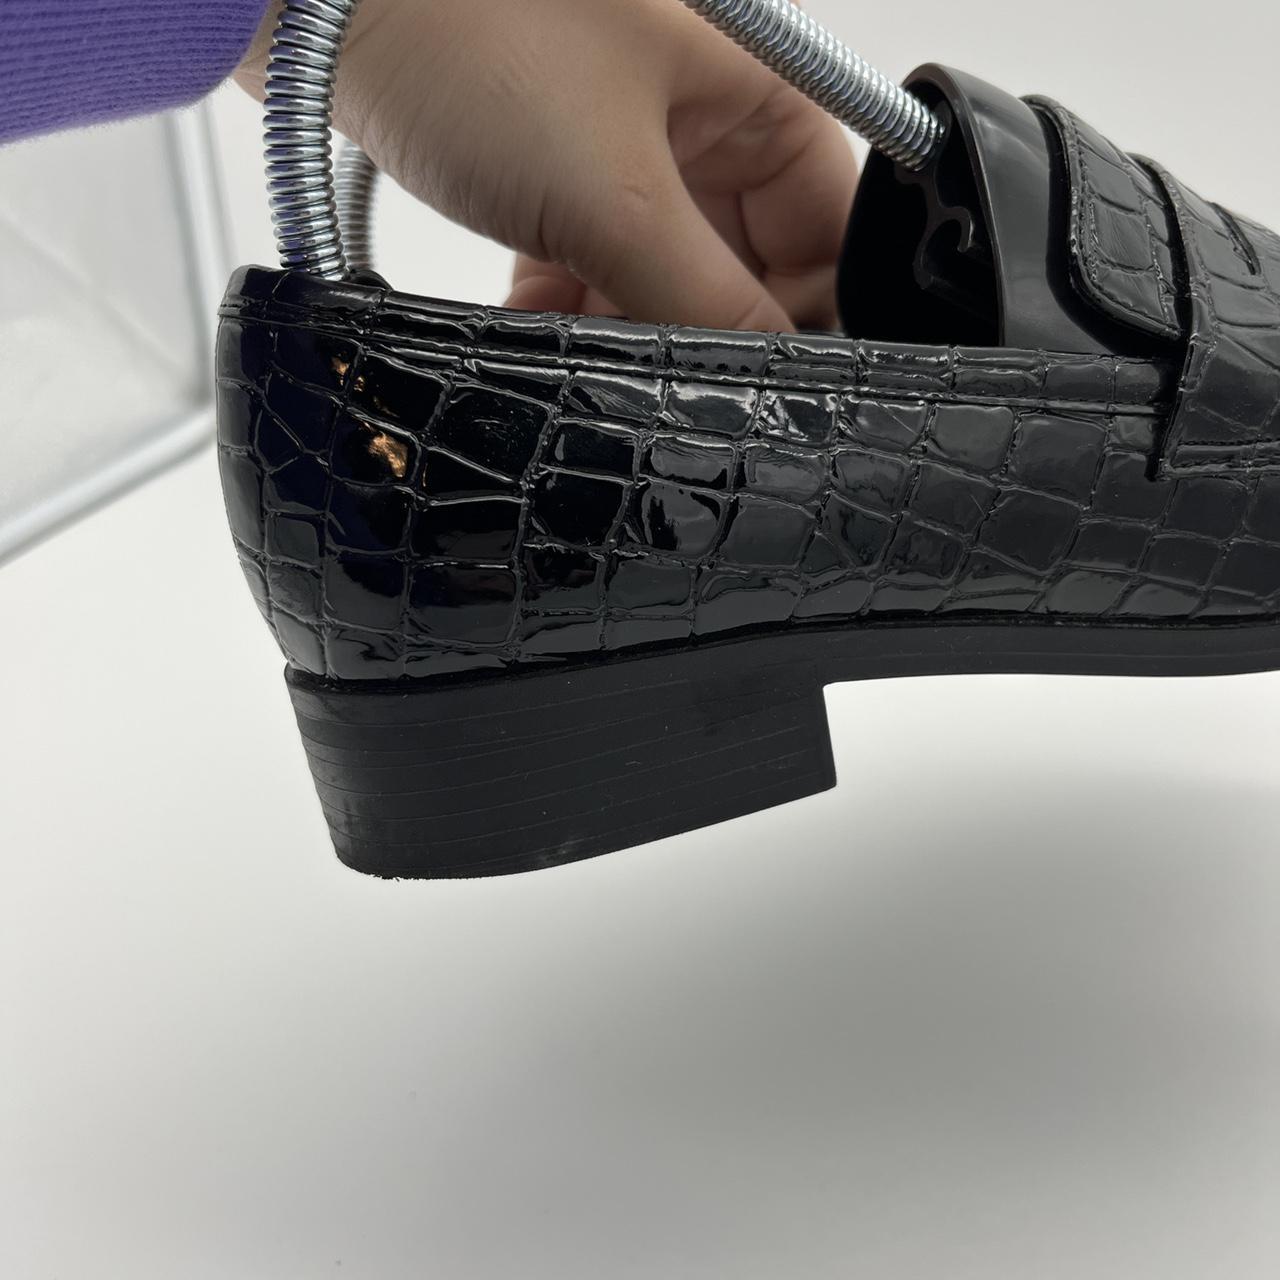 Product Image 4 - Black Loafers

•Women’s ALDO Black Reptile